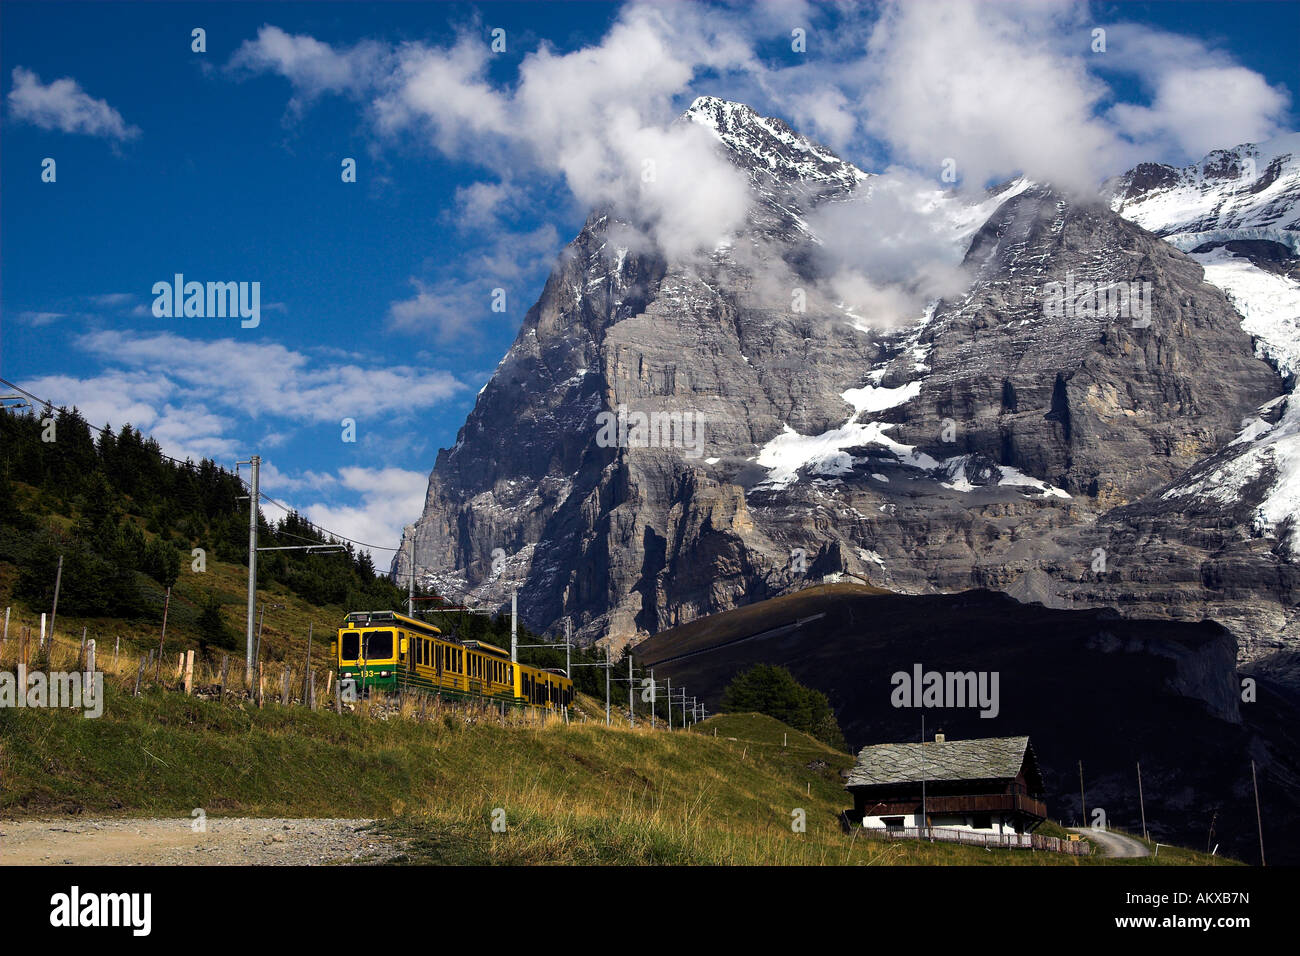 Wengener alp with Eiger mountain and Jungfraubahn railway, Bernese Oberland, highlands, canton of Bern, Switzerland Stock Photo